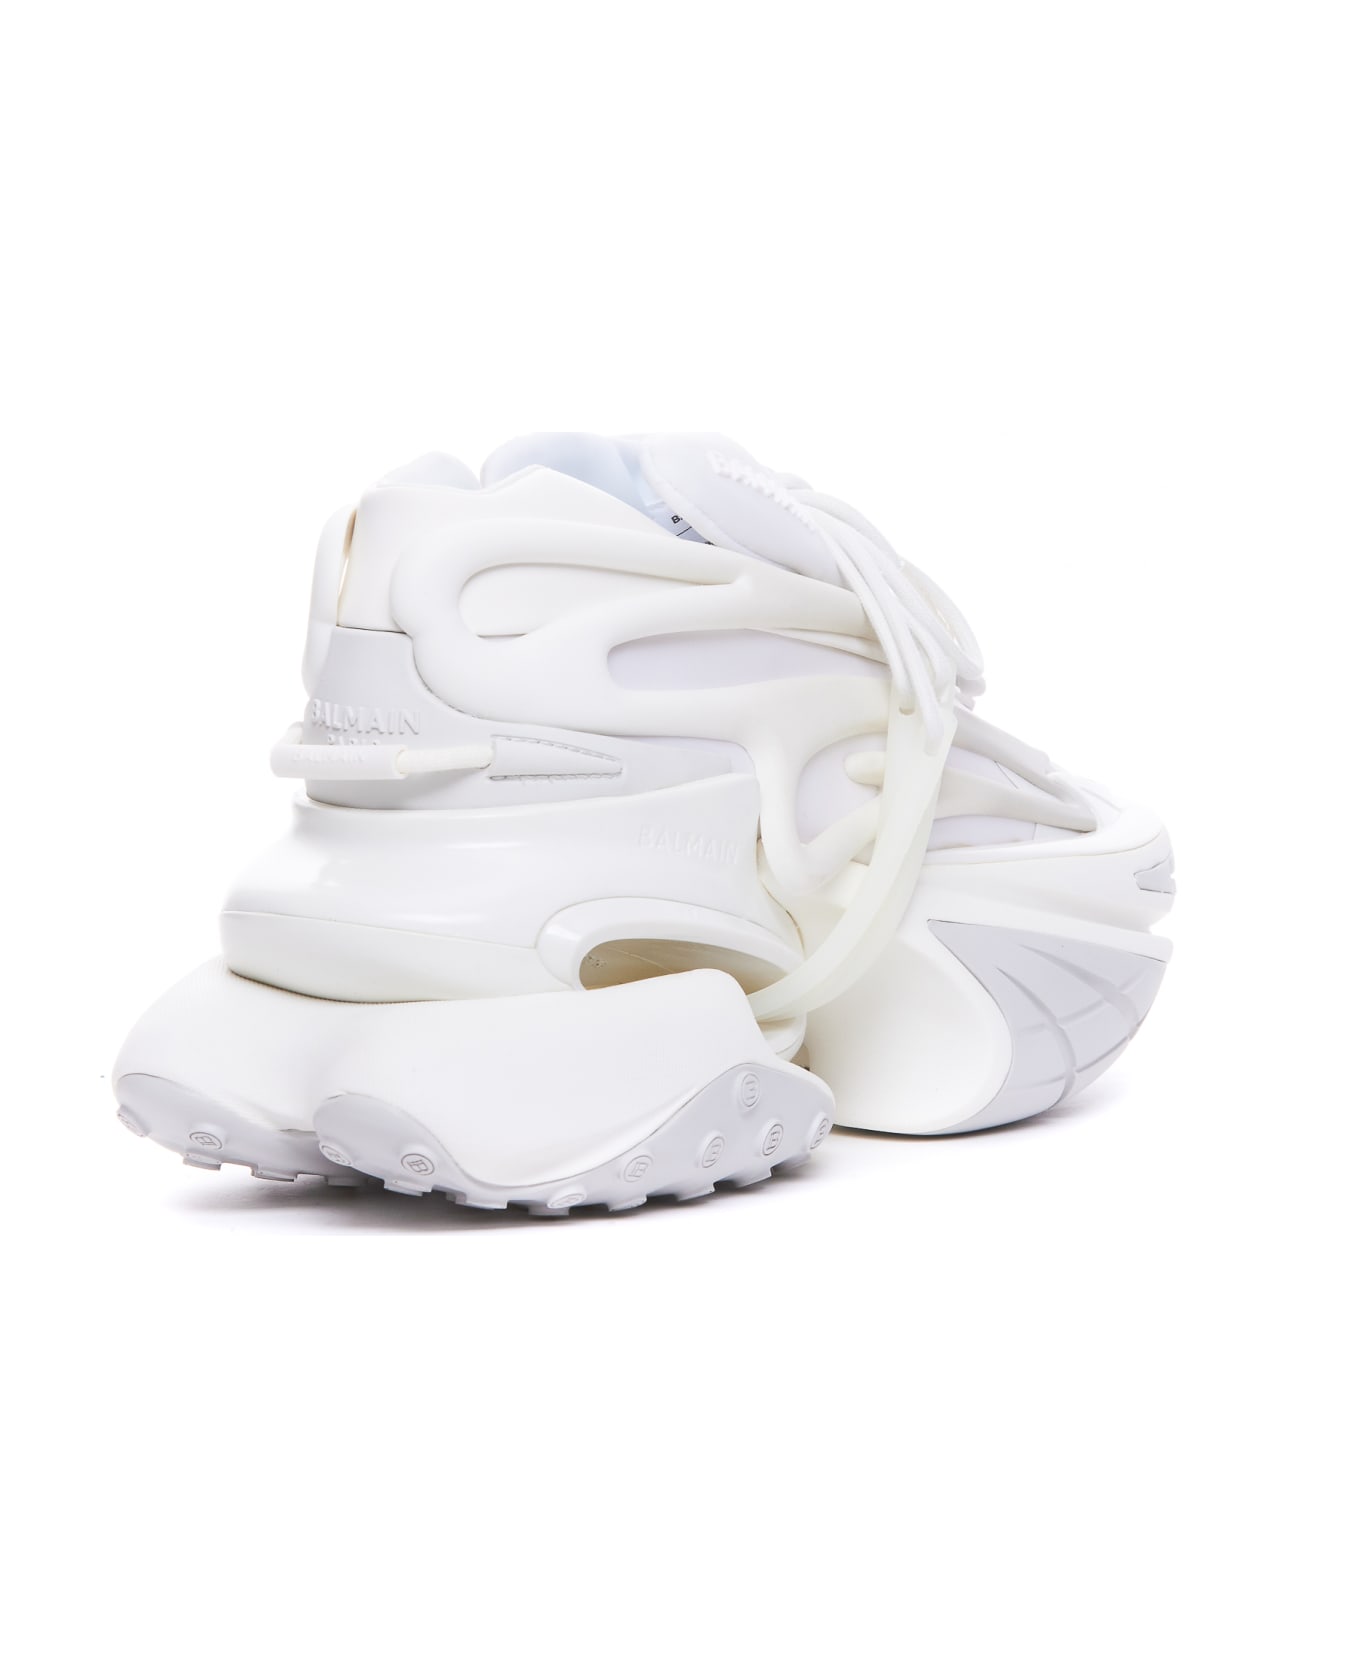 Balmain Unicorn Sneakers - White スニーカー